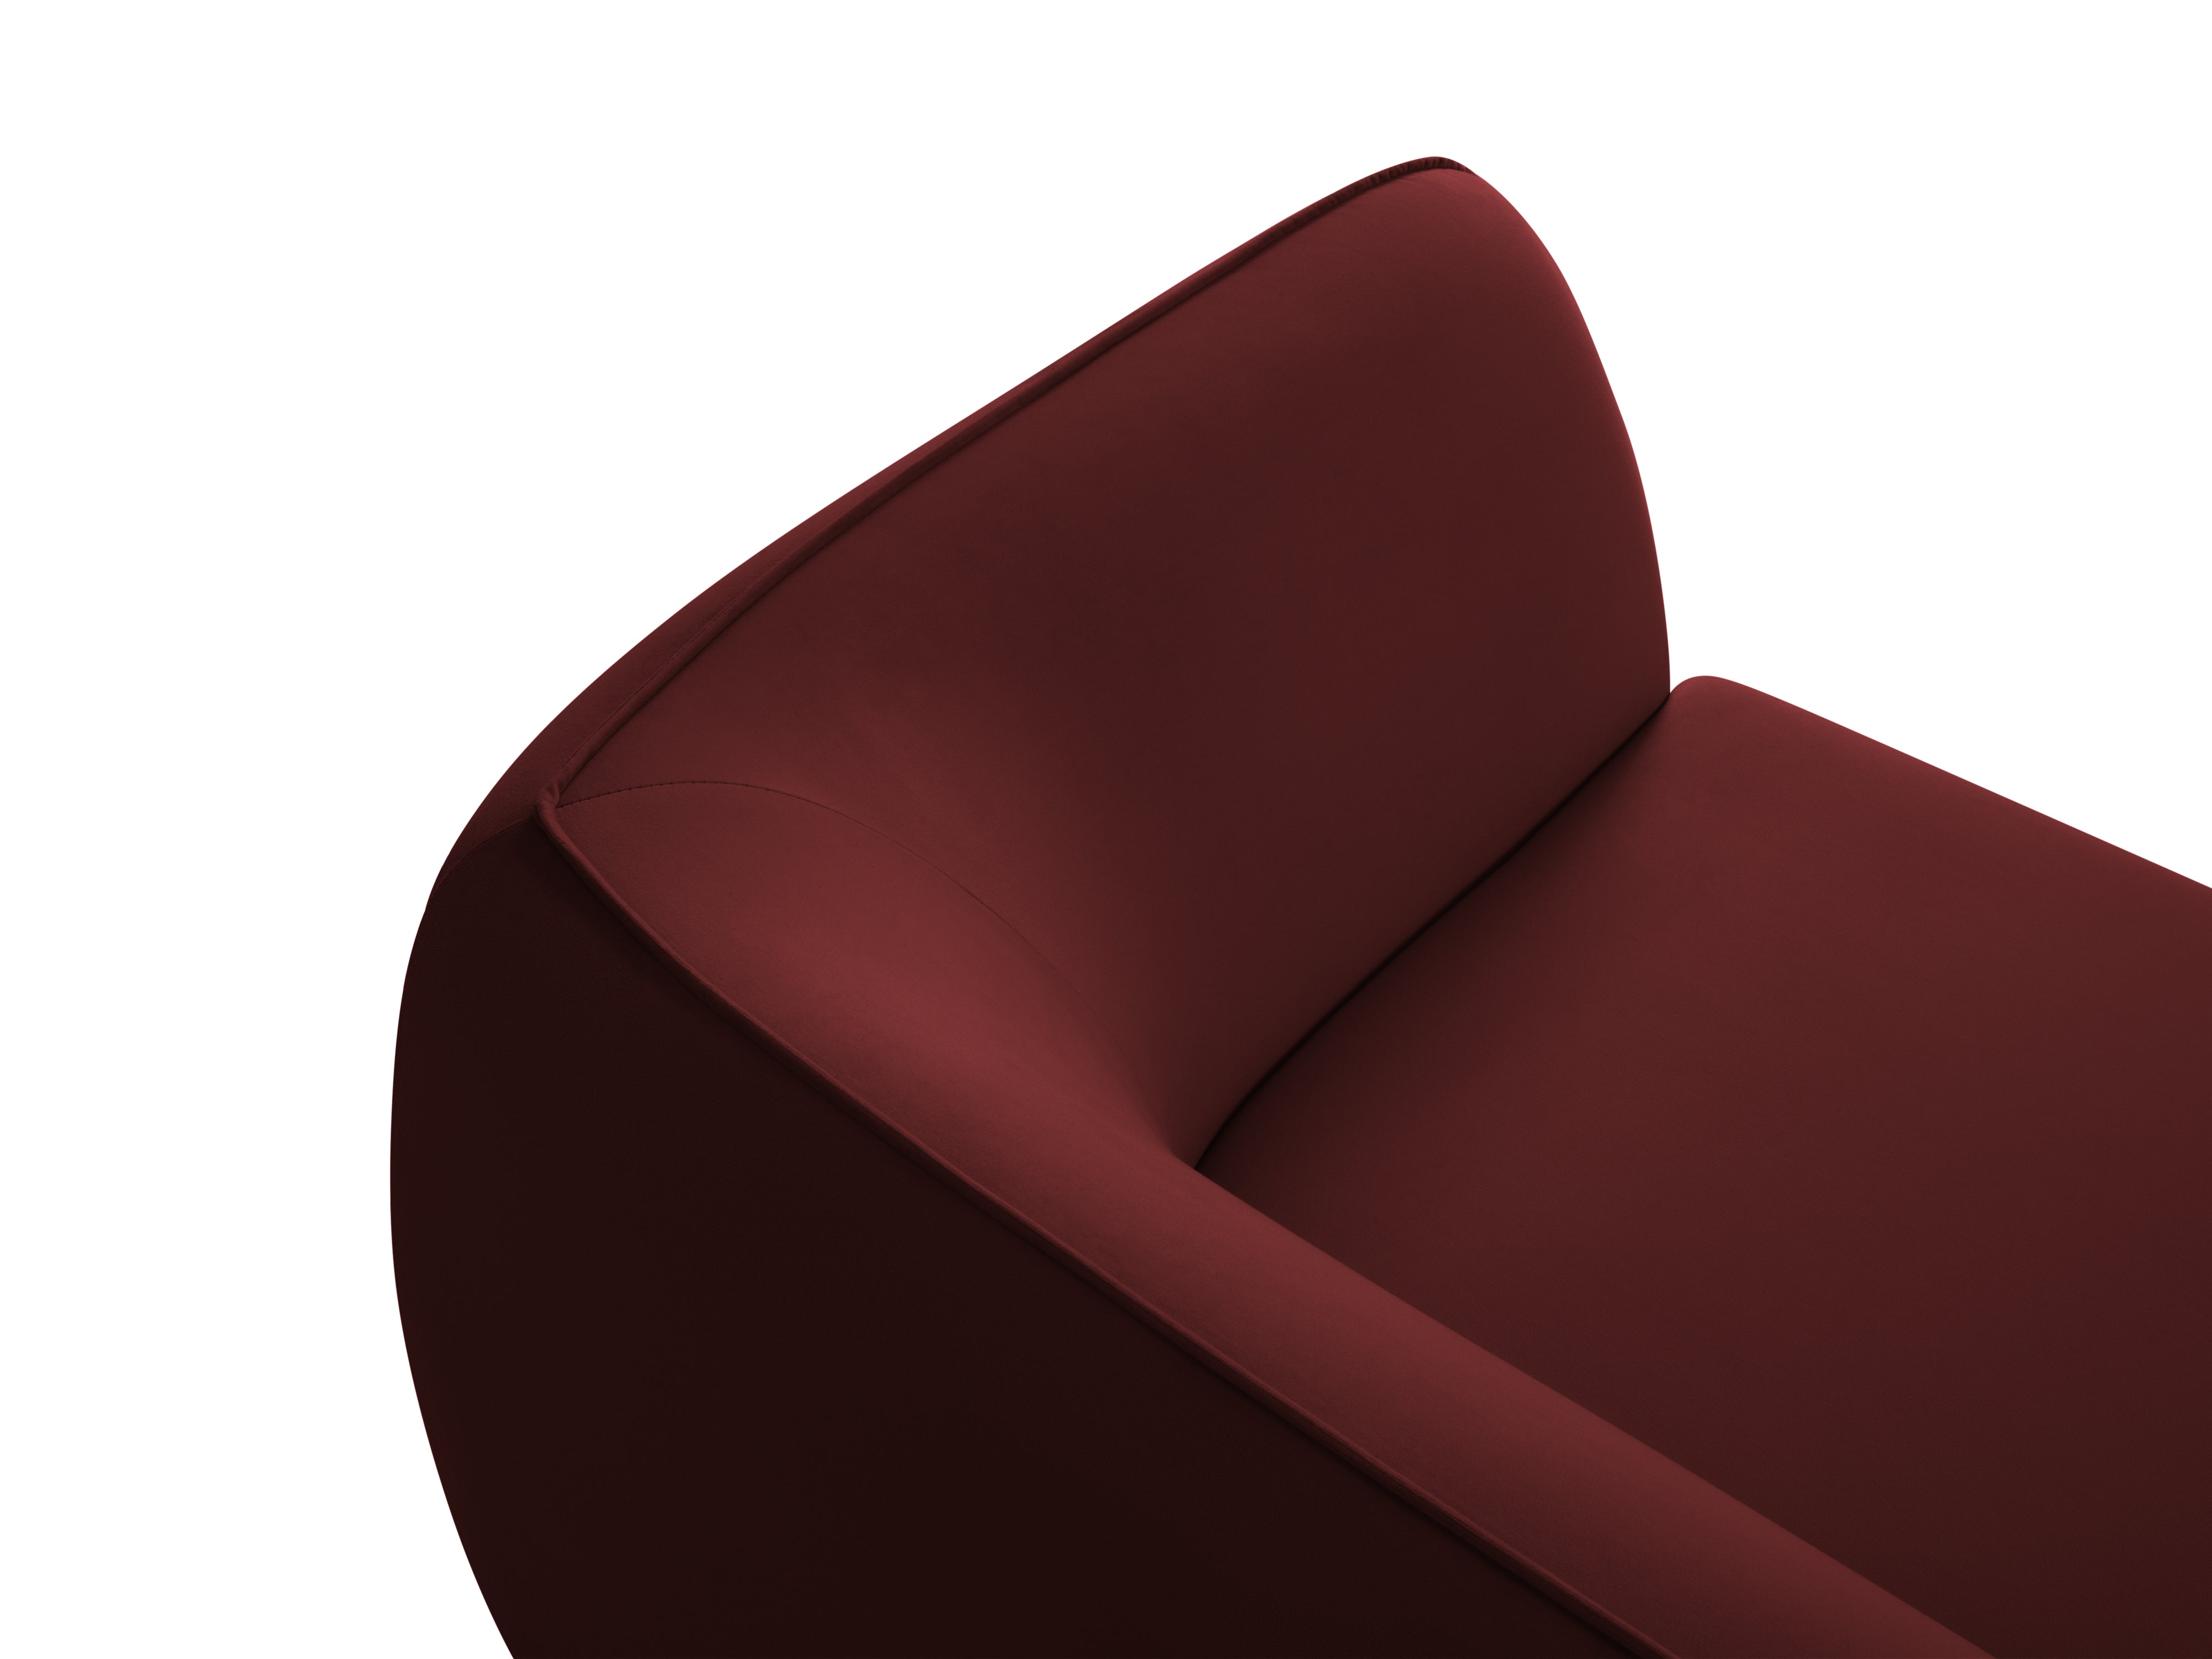 Velvet Sofa, "Lando", 3 Seats, 225x100x77
Made in Europe, Micadoni, Eye on Design